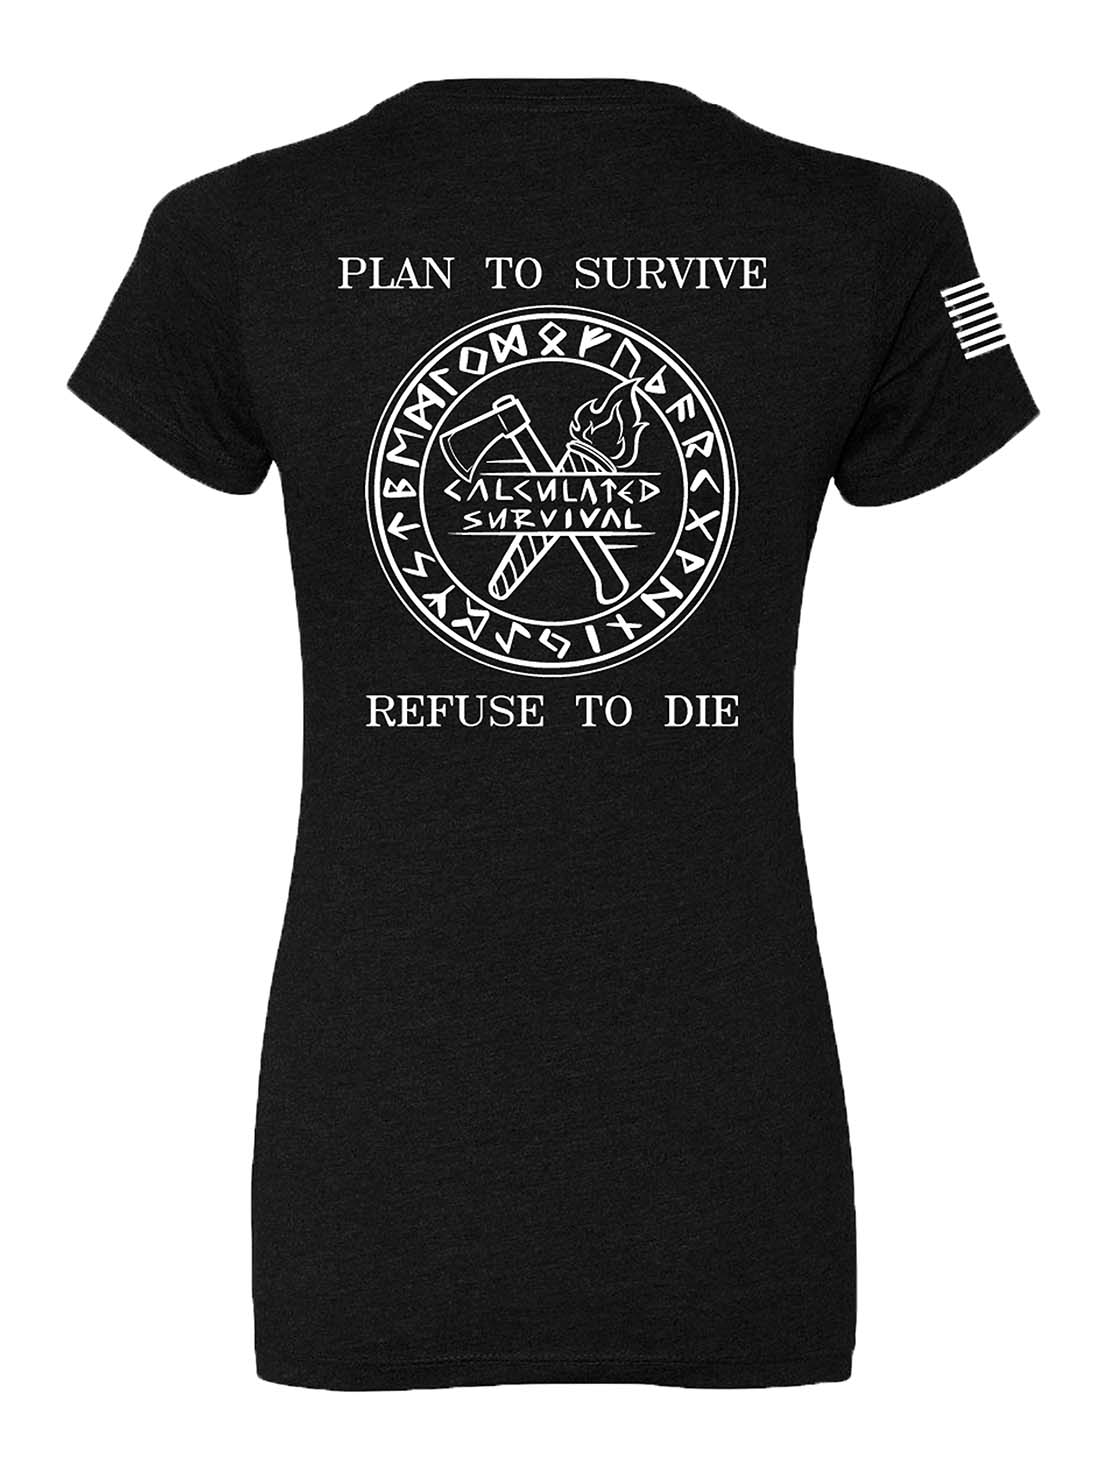 Women's Calculated Survival Shirt